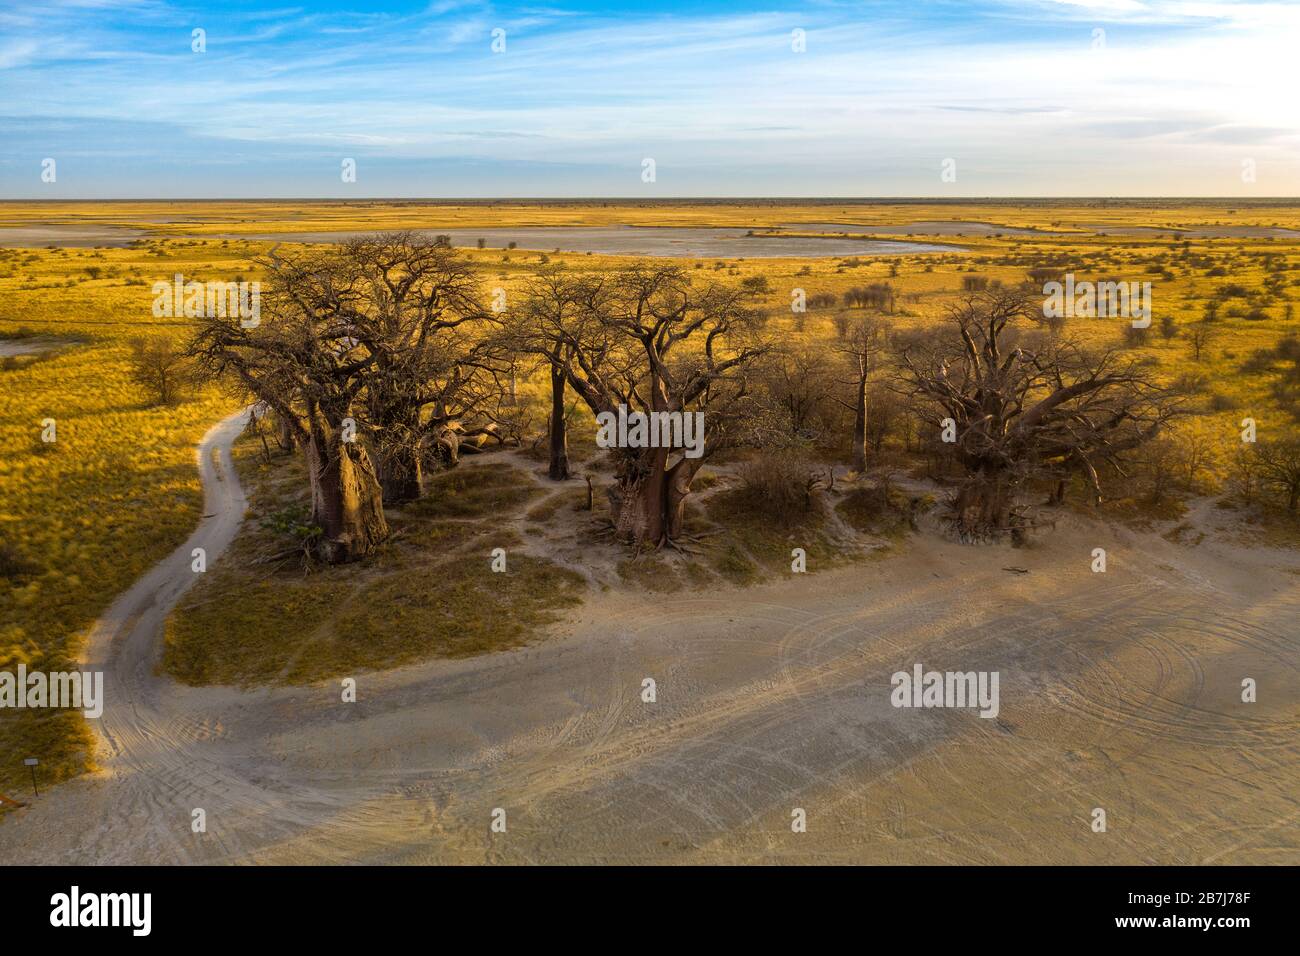 Baines baobab del Parque Nacional Nxai Pan - Botswana Foto de stock